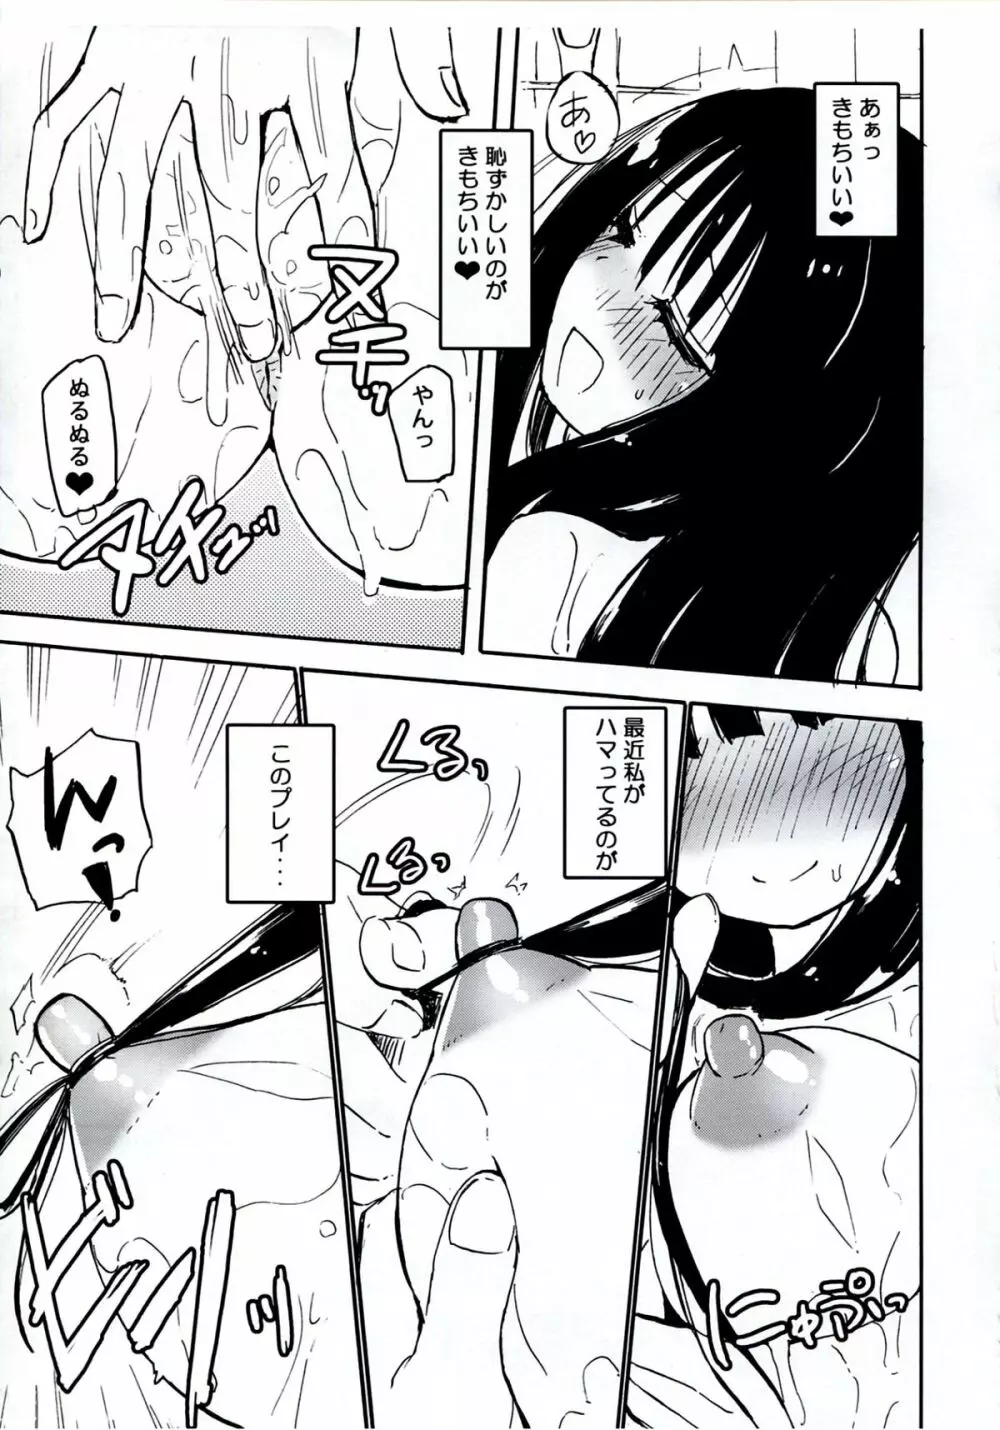 Homuraya Milk ★ Collection 2 - page73